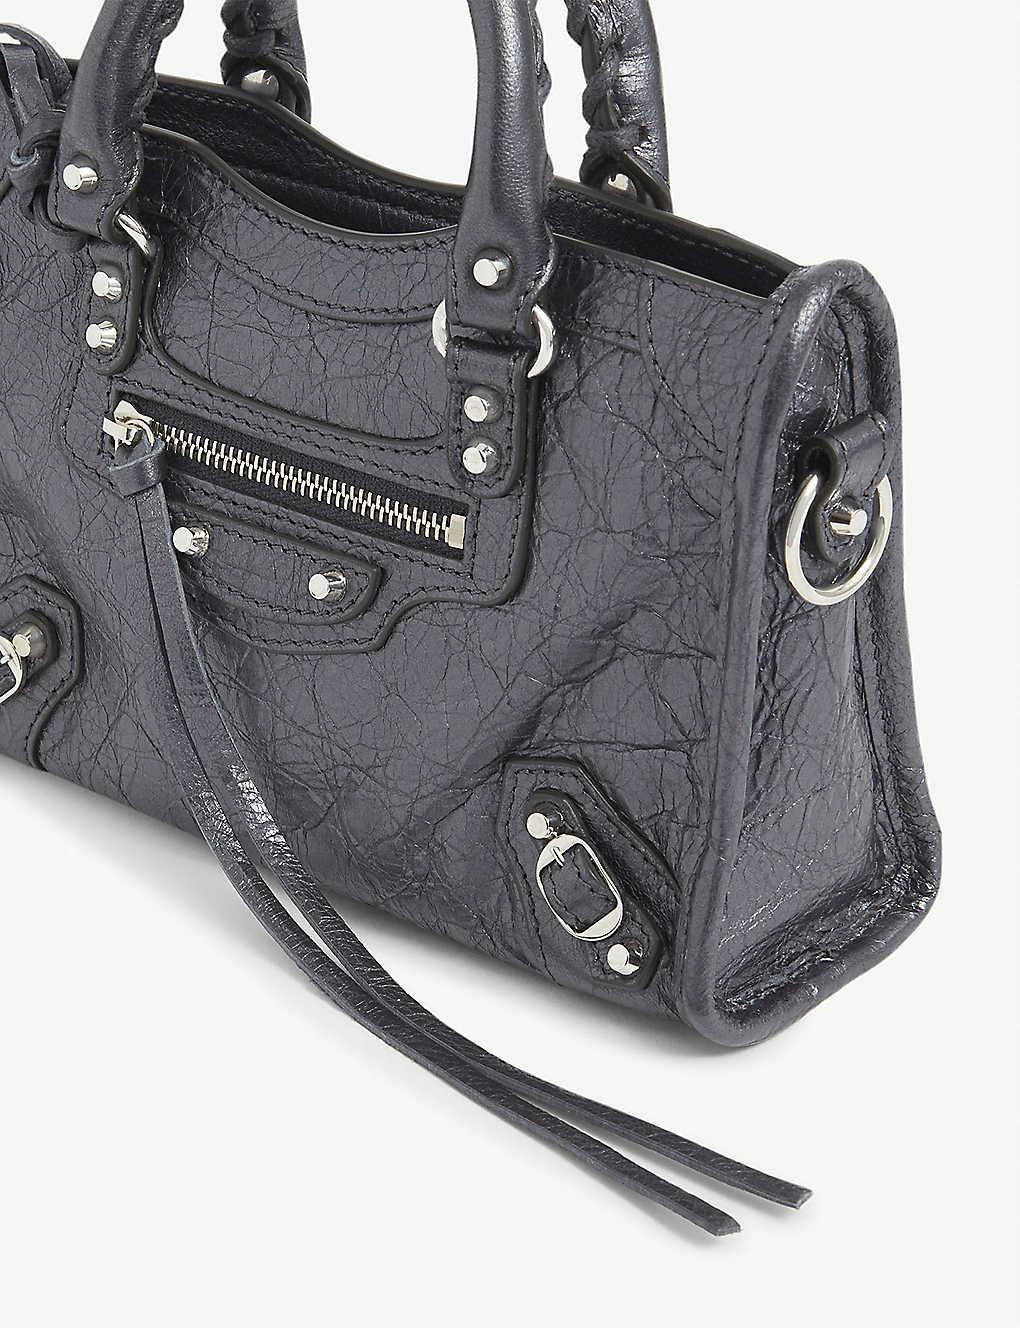 Balenciaga City Nano Metallic Leather Shoulder Bag in Graphite (dk Grey)  (Gray) - Lyst